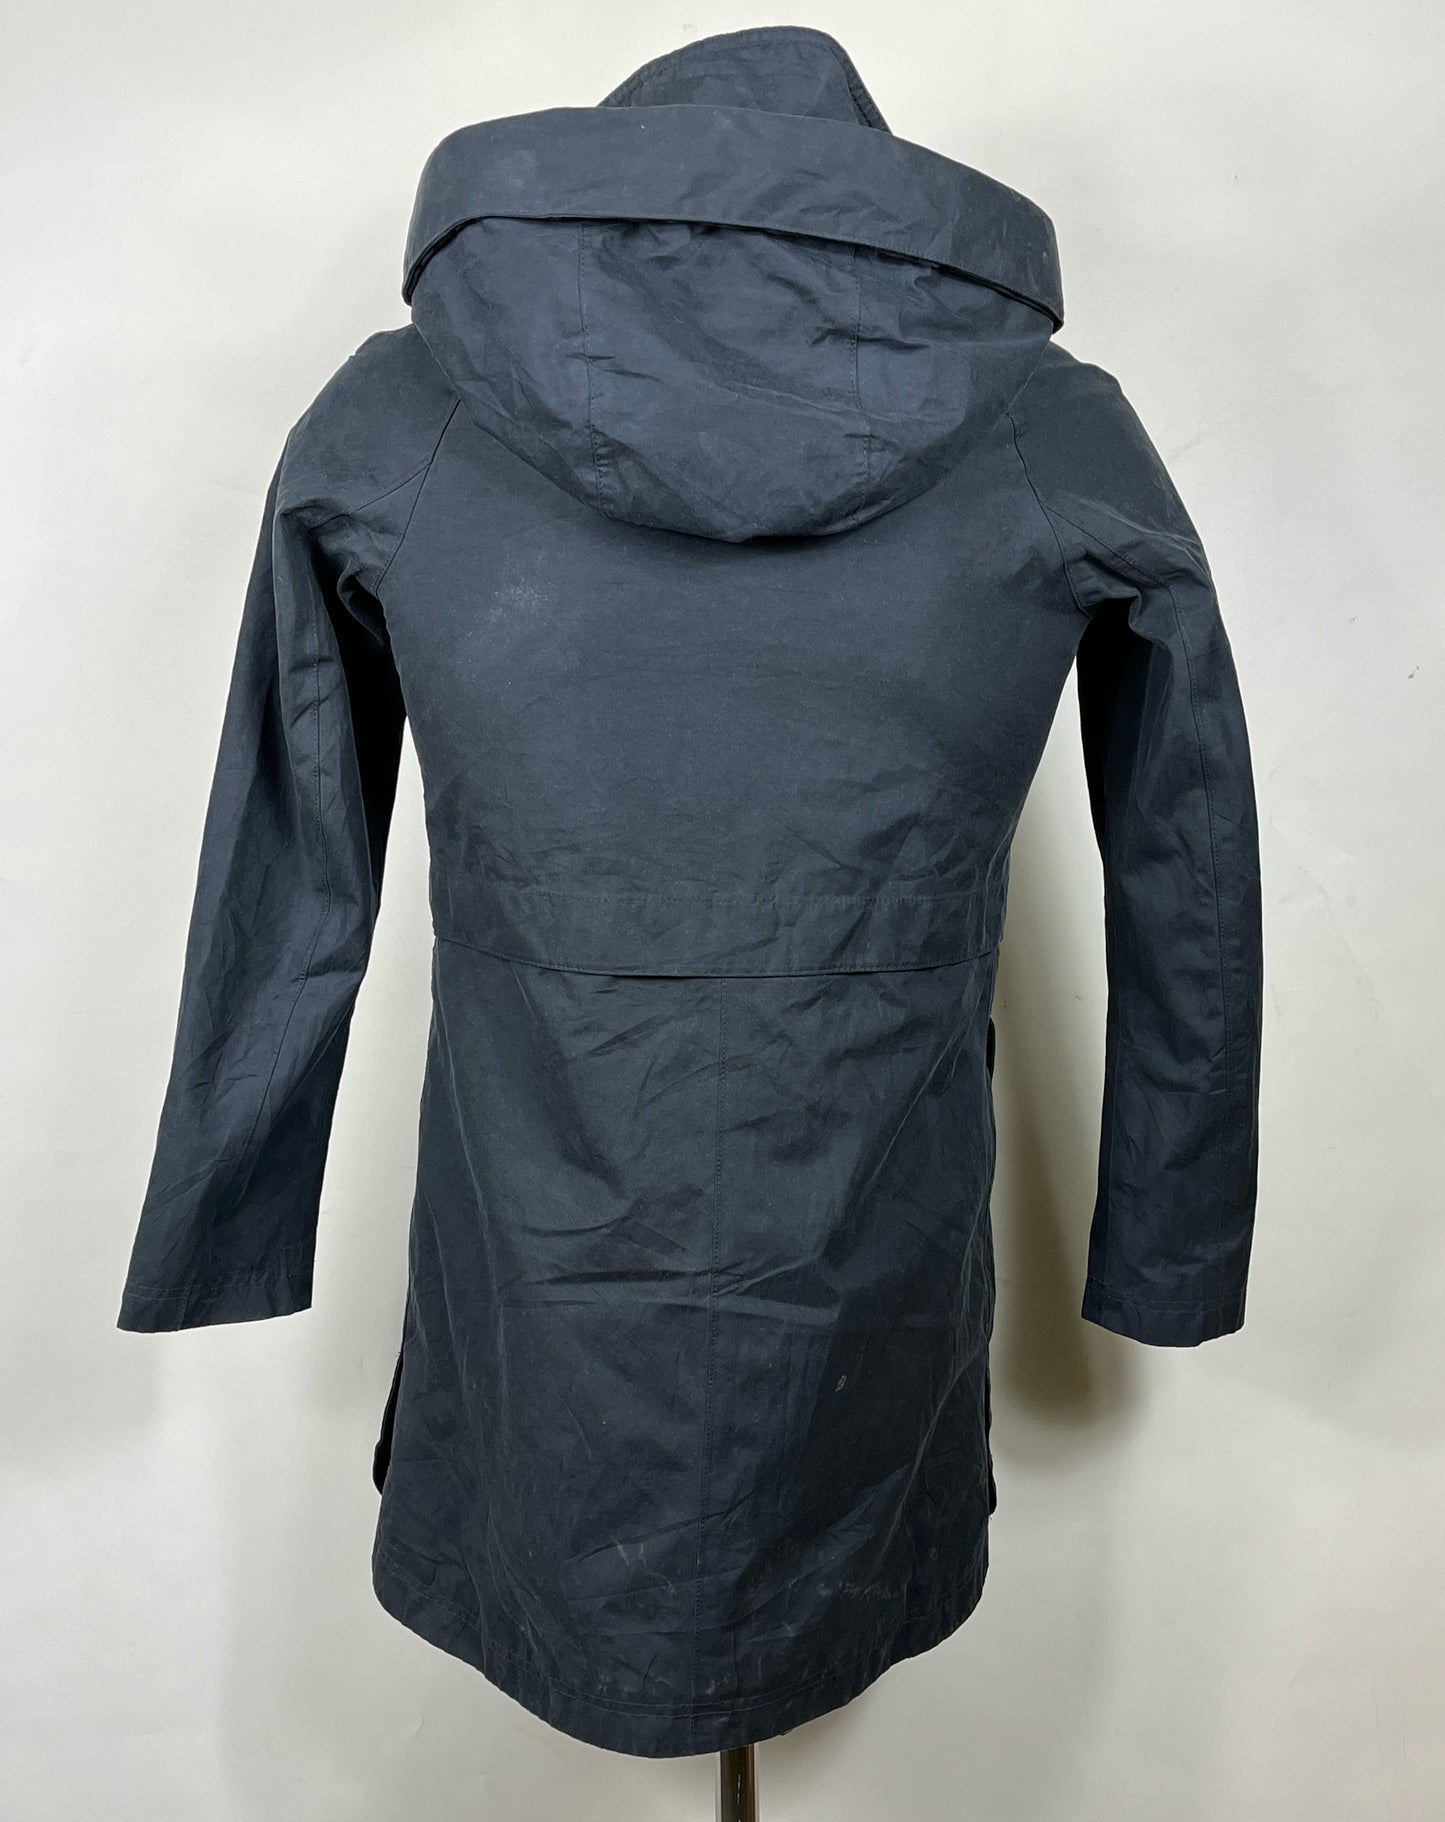 Giacca Barbour da donna blu con cappuccio Uk8 Xsmall- Navy waterproof jacket UK8